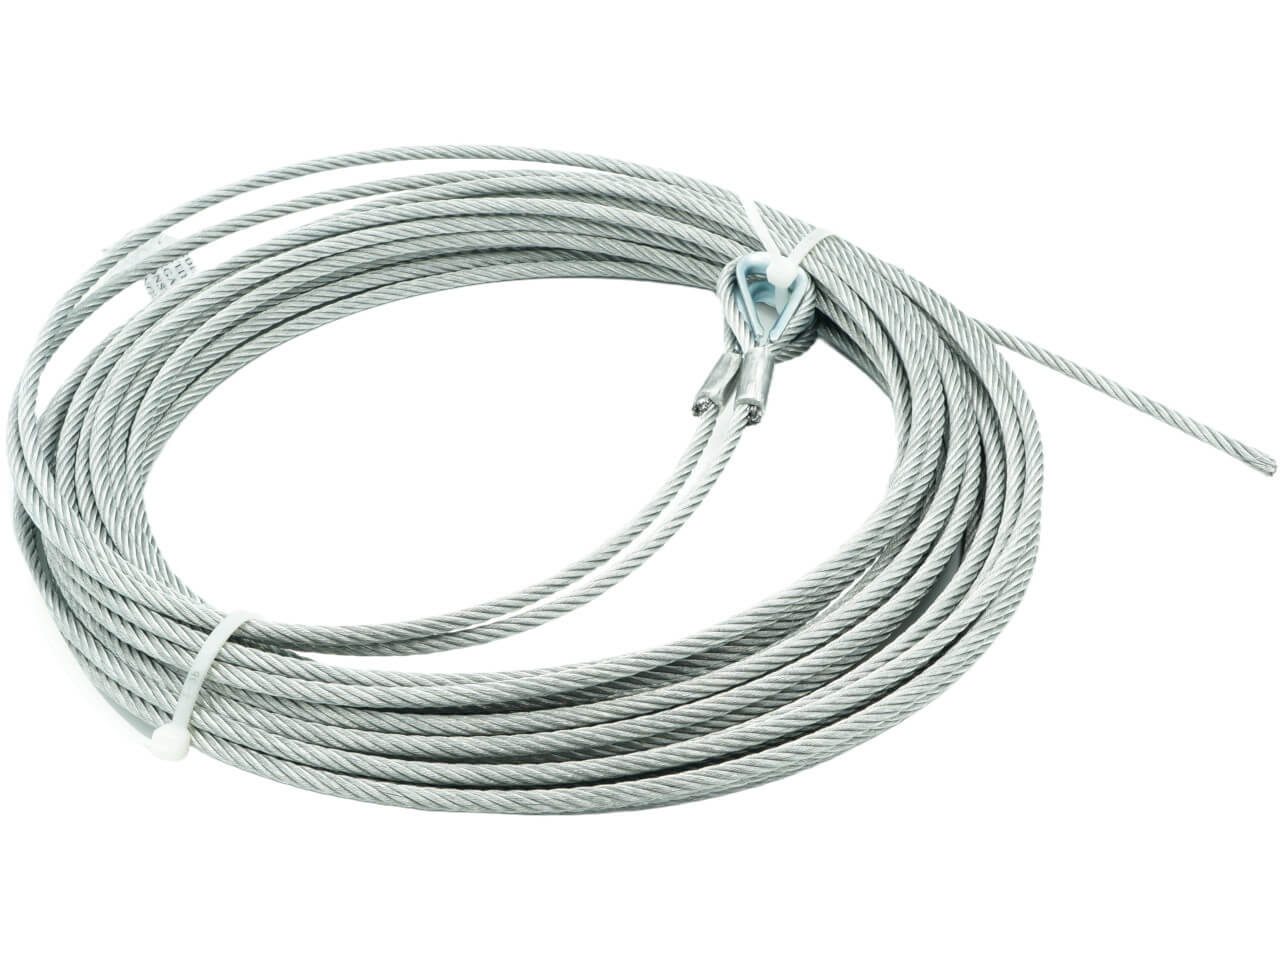 Cable Diameter 4,0mm Length 8m